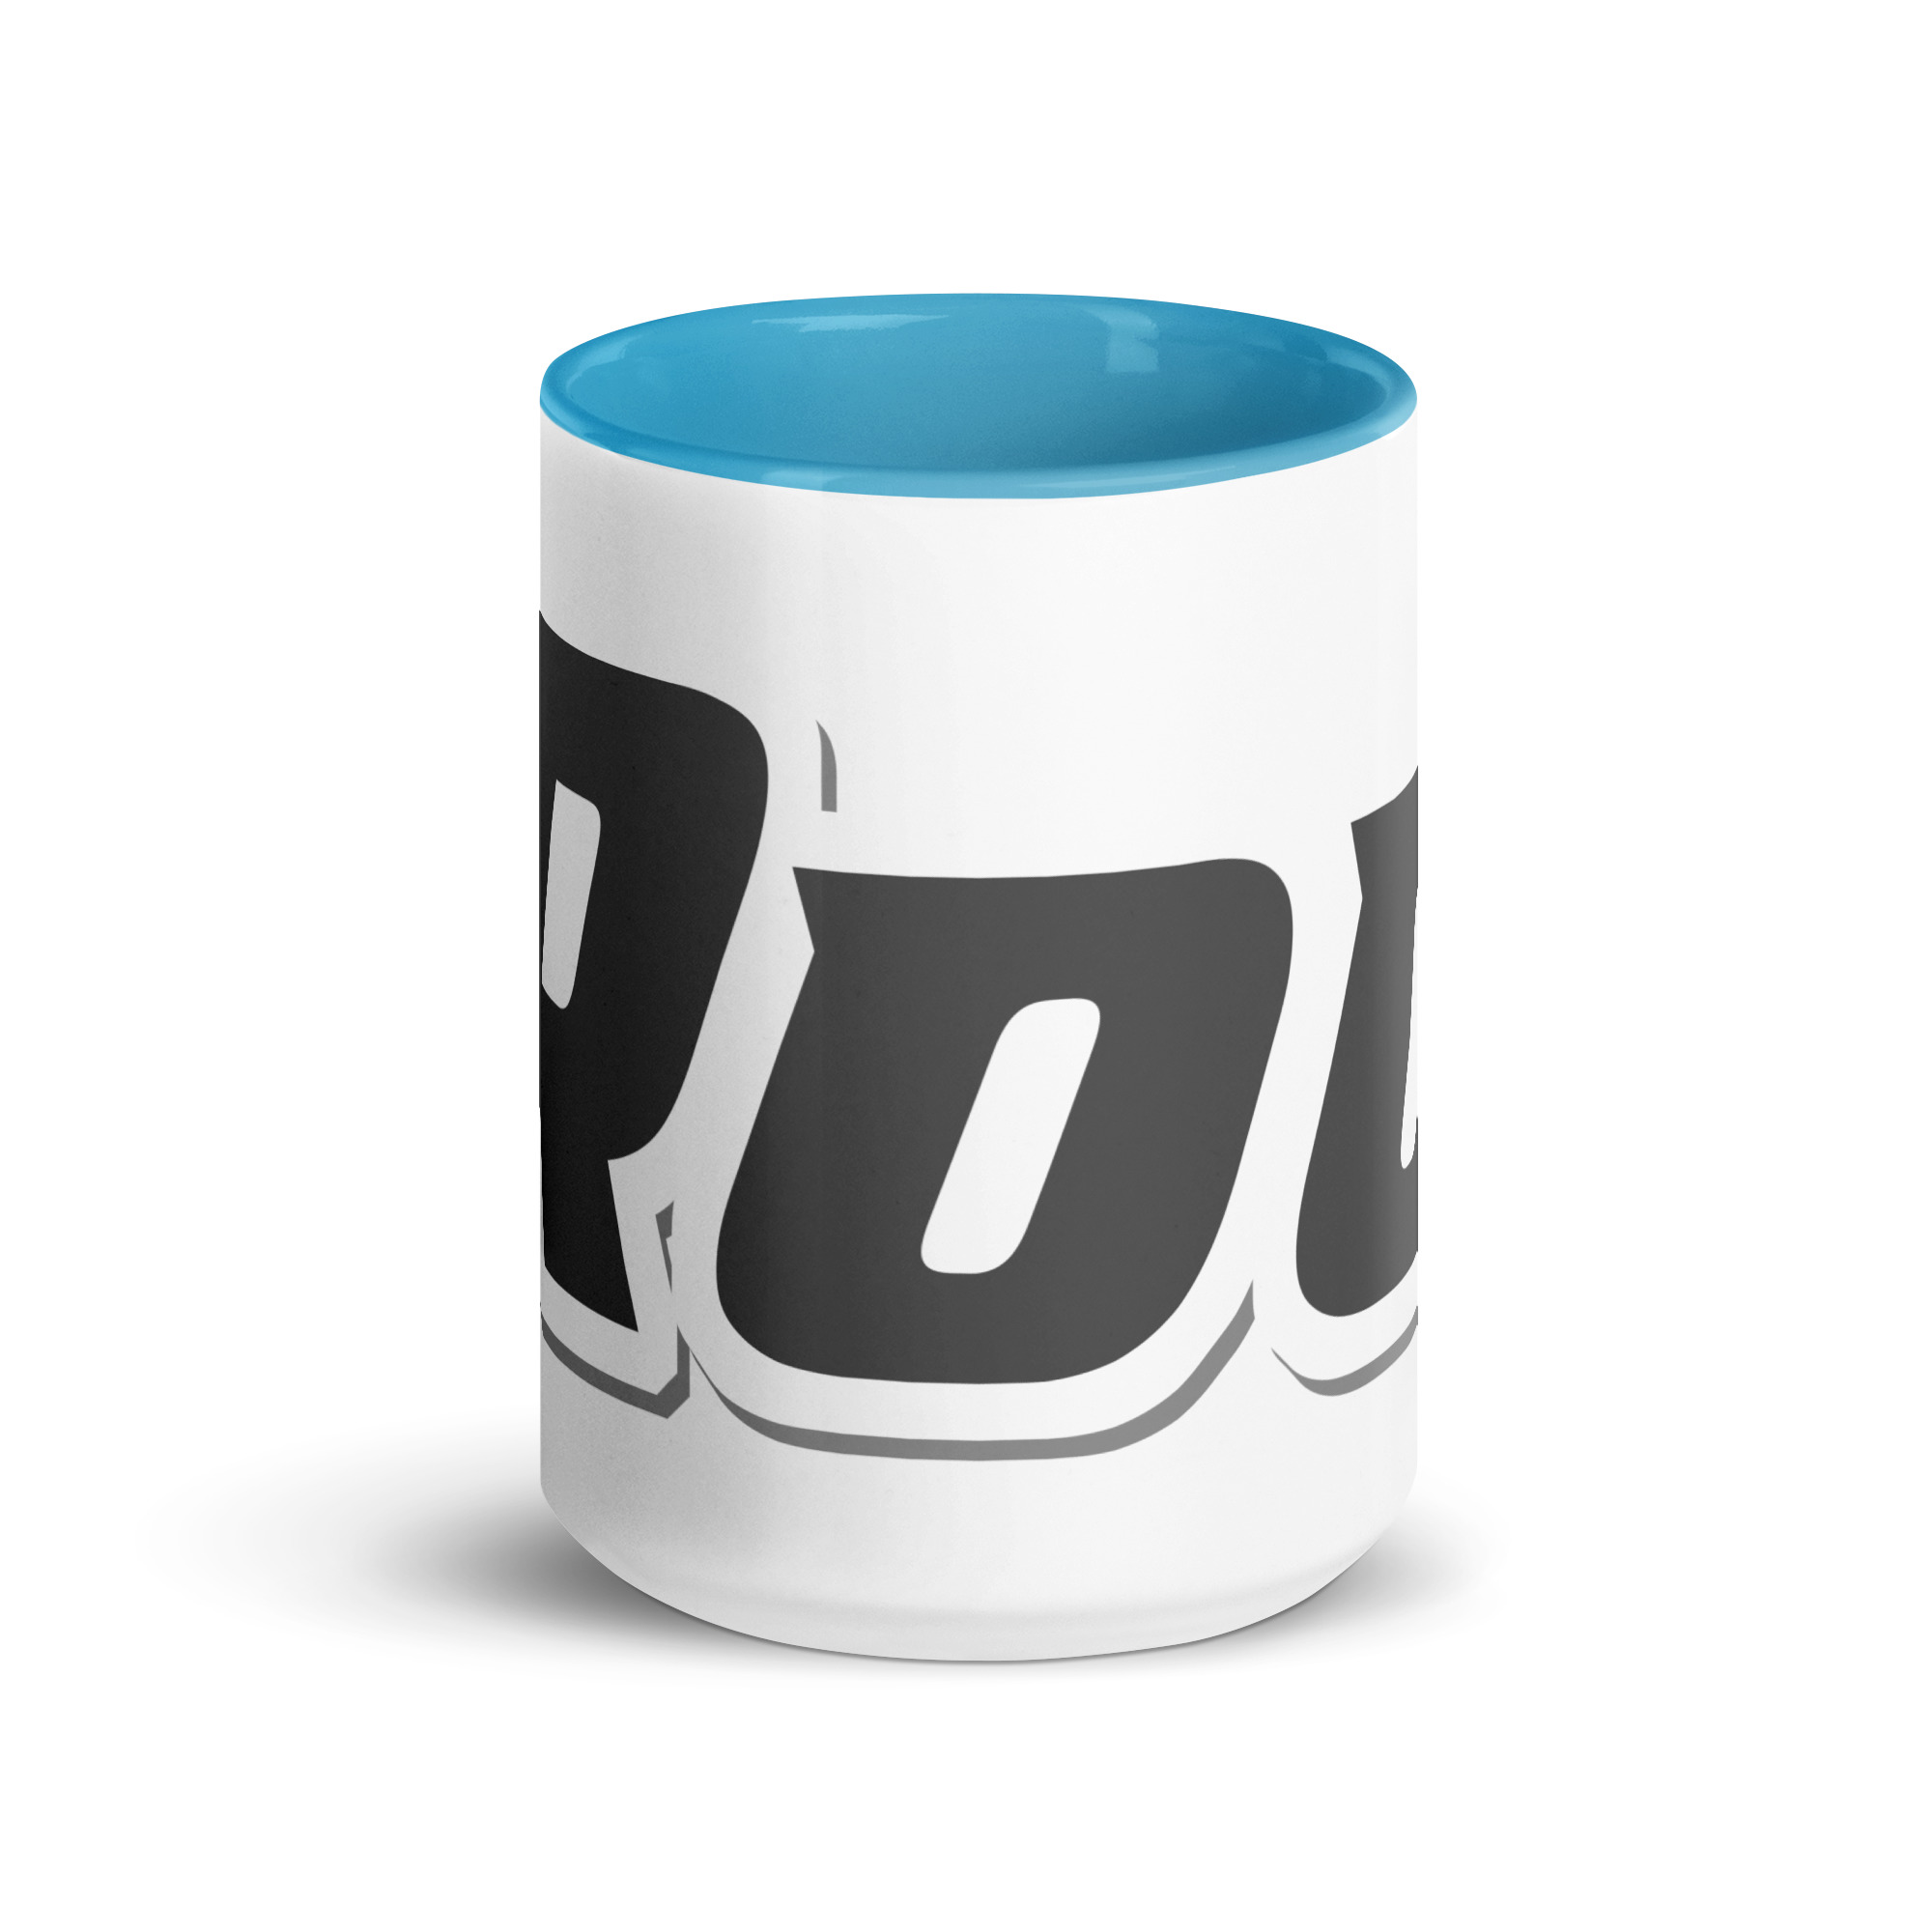 white-ceramic-mug-with-color-inside-blue-15-oz-front-6525b6484c85d.jpg